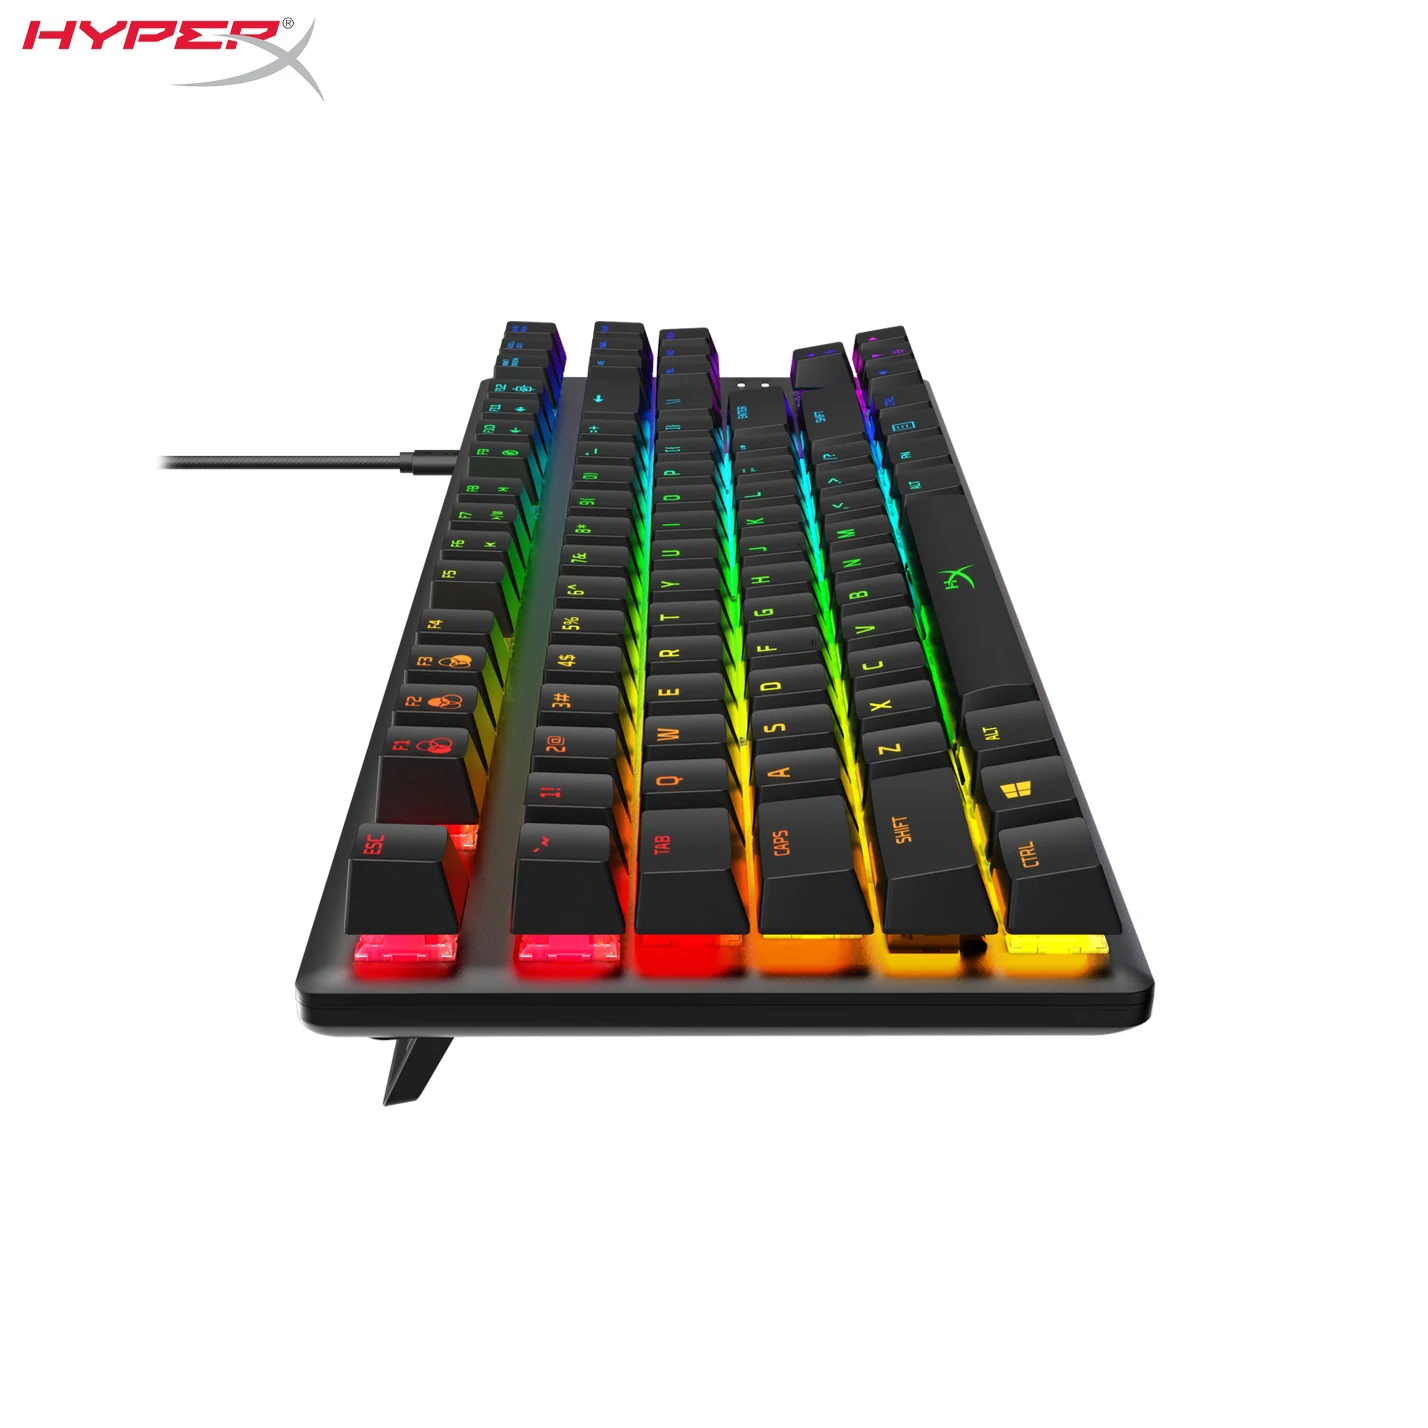 HyperX Alufelni Eredete Core 87 kulcsok RGB Mechanikus Gaming-Billentyűzet